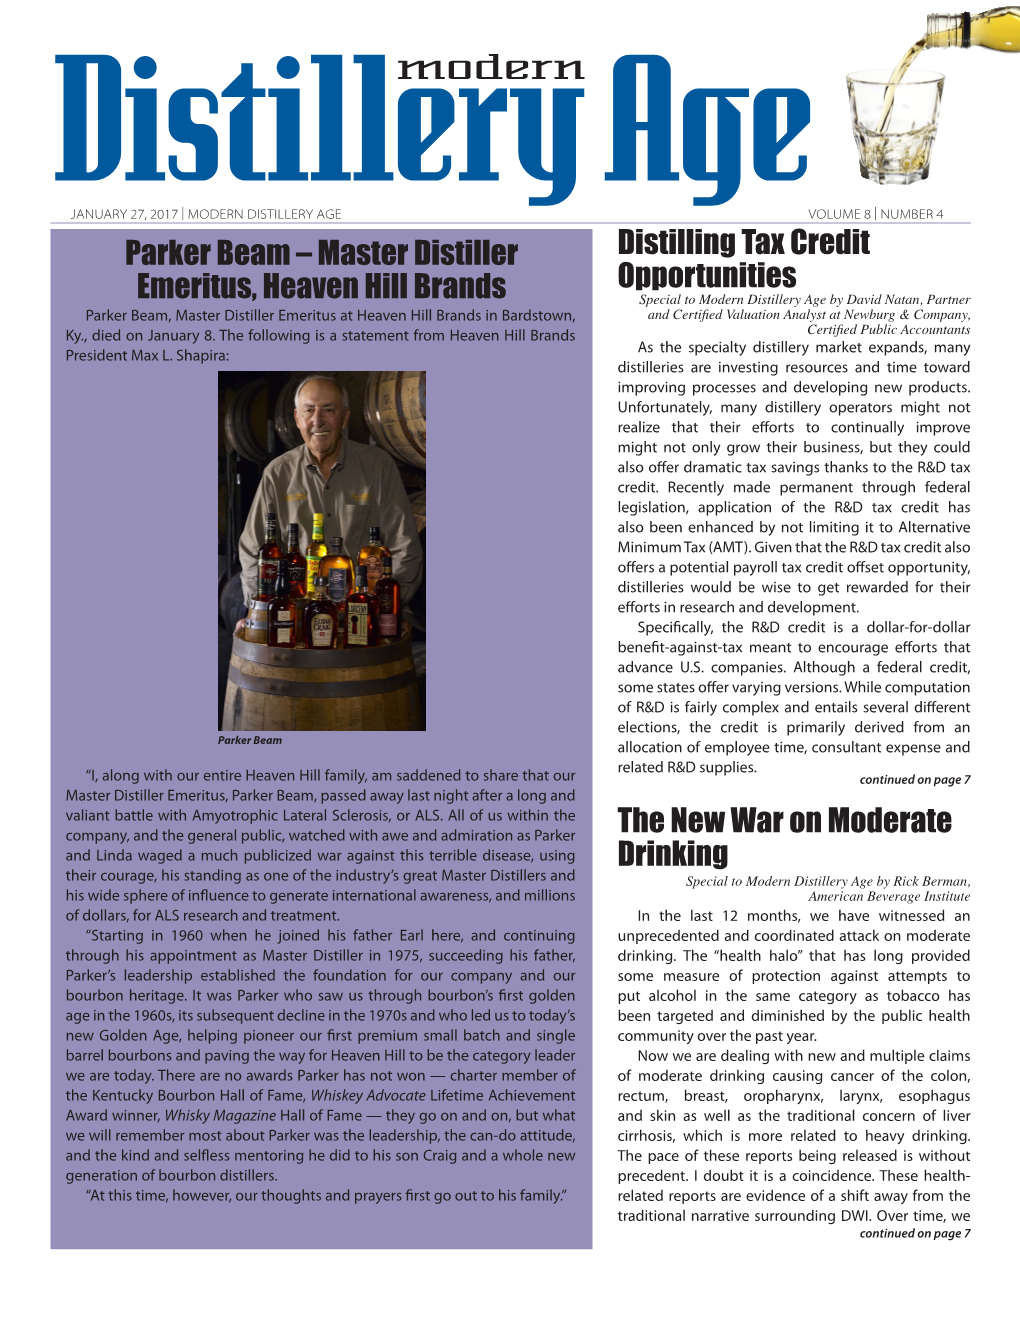 Parker Beam – Master Distiller Emeritus, Heaven Hill Brands